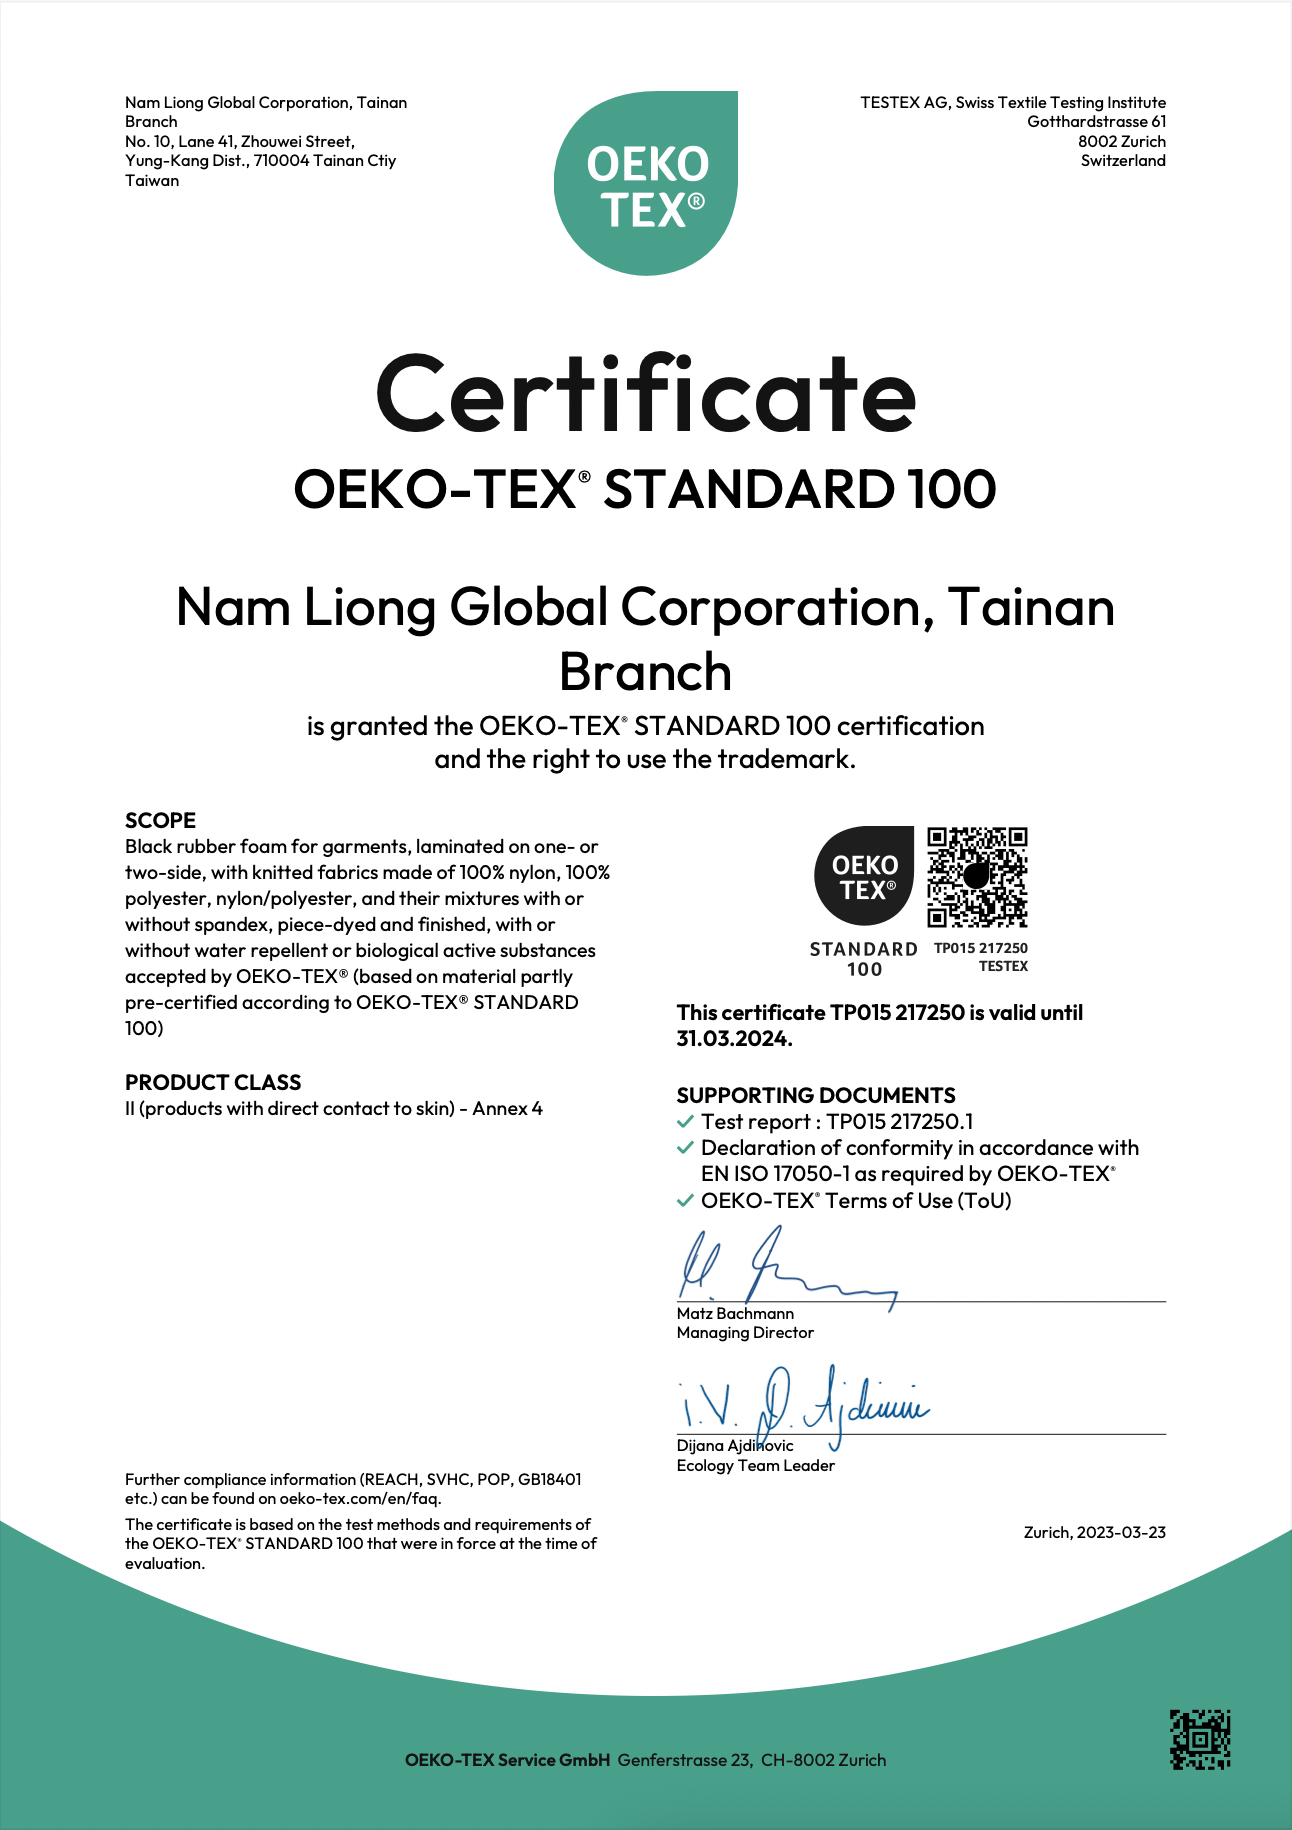 Certificação Oeko-Tex Standard 100® aprovada.